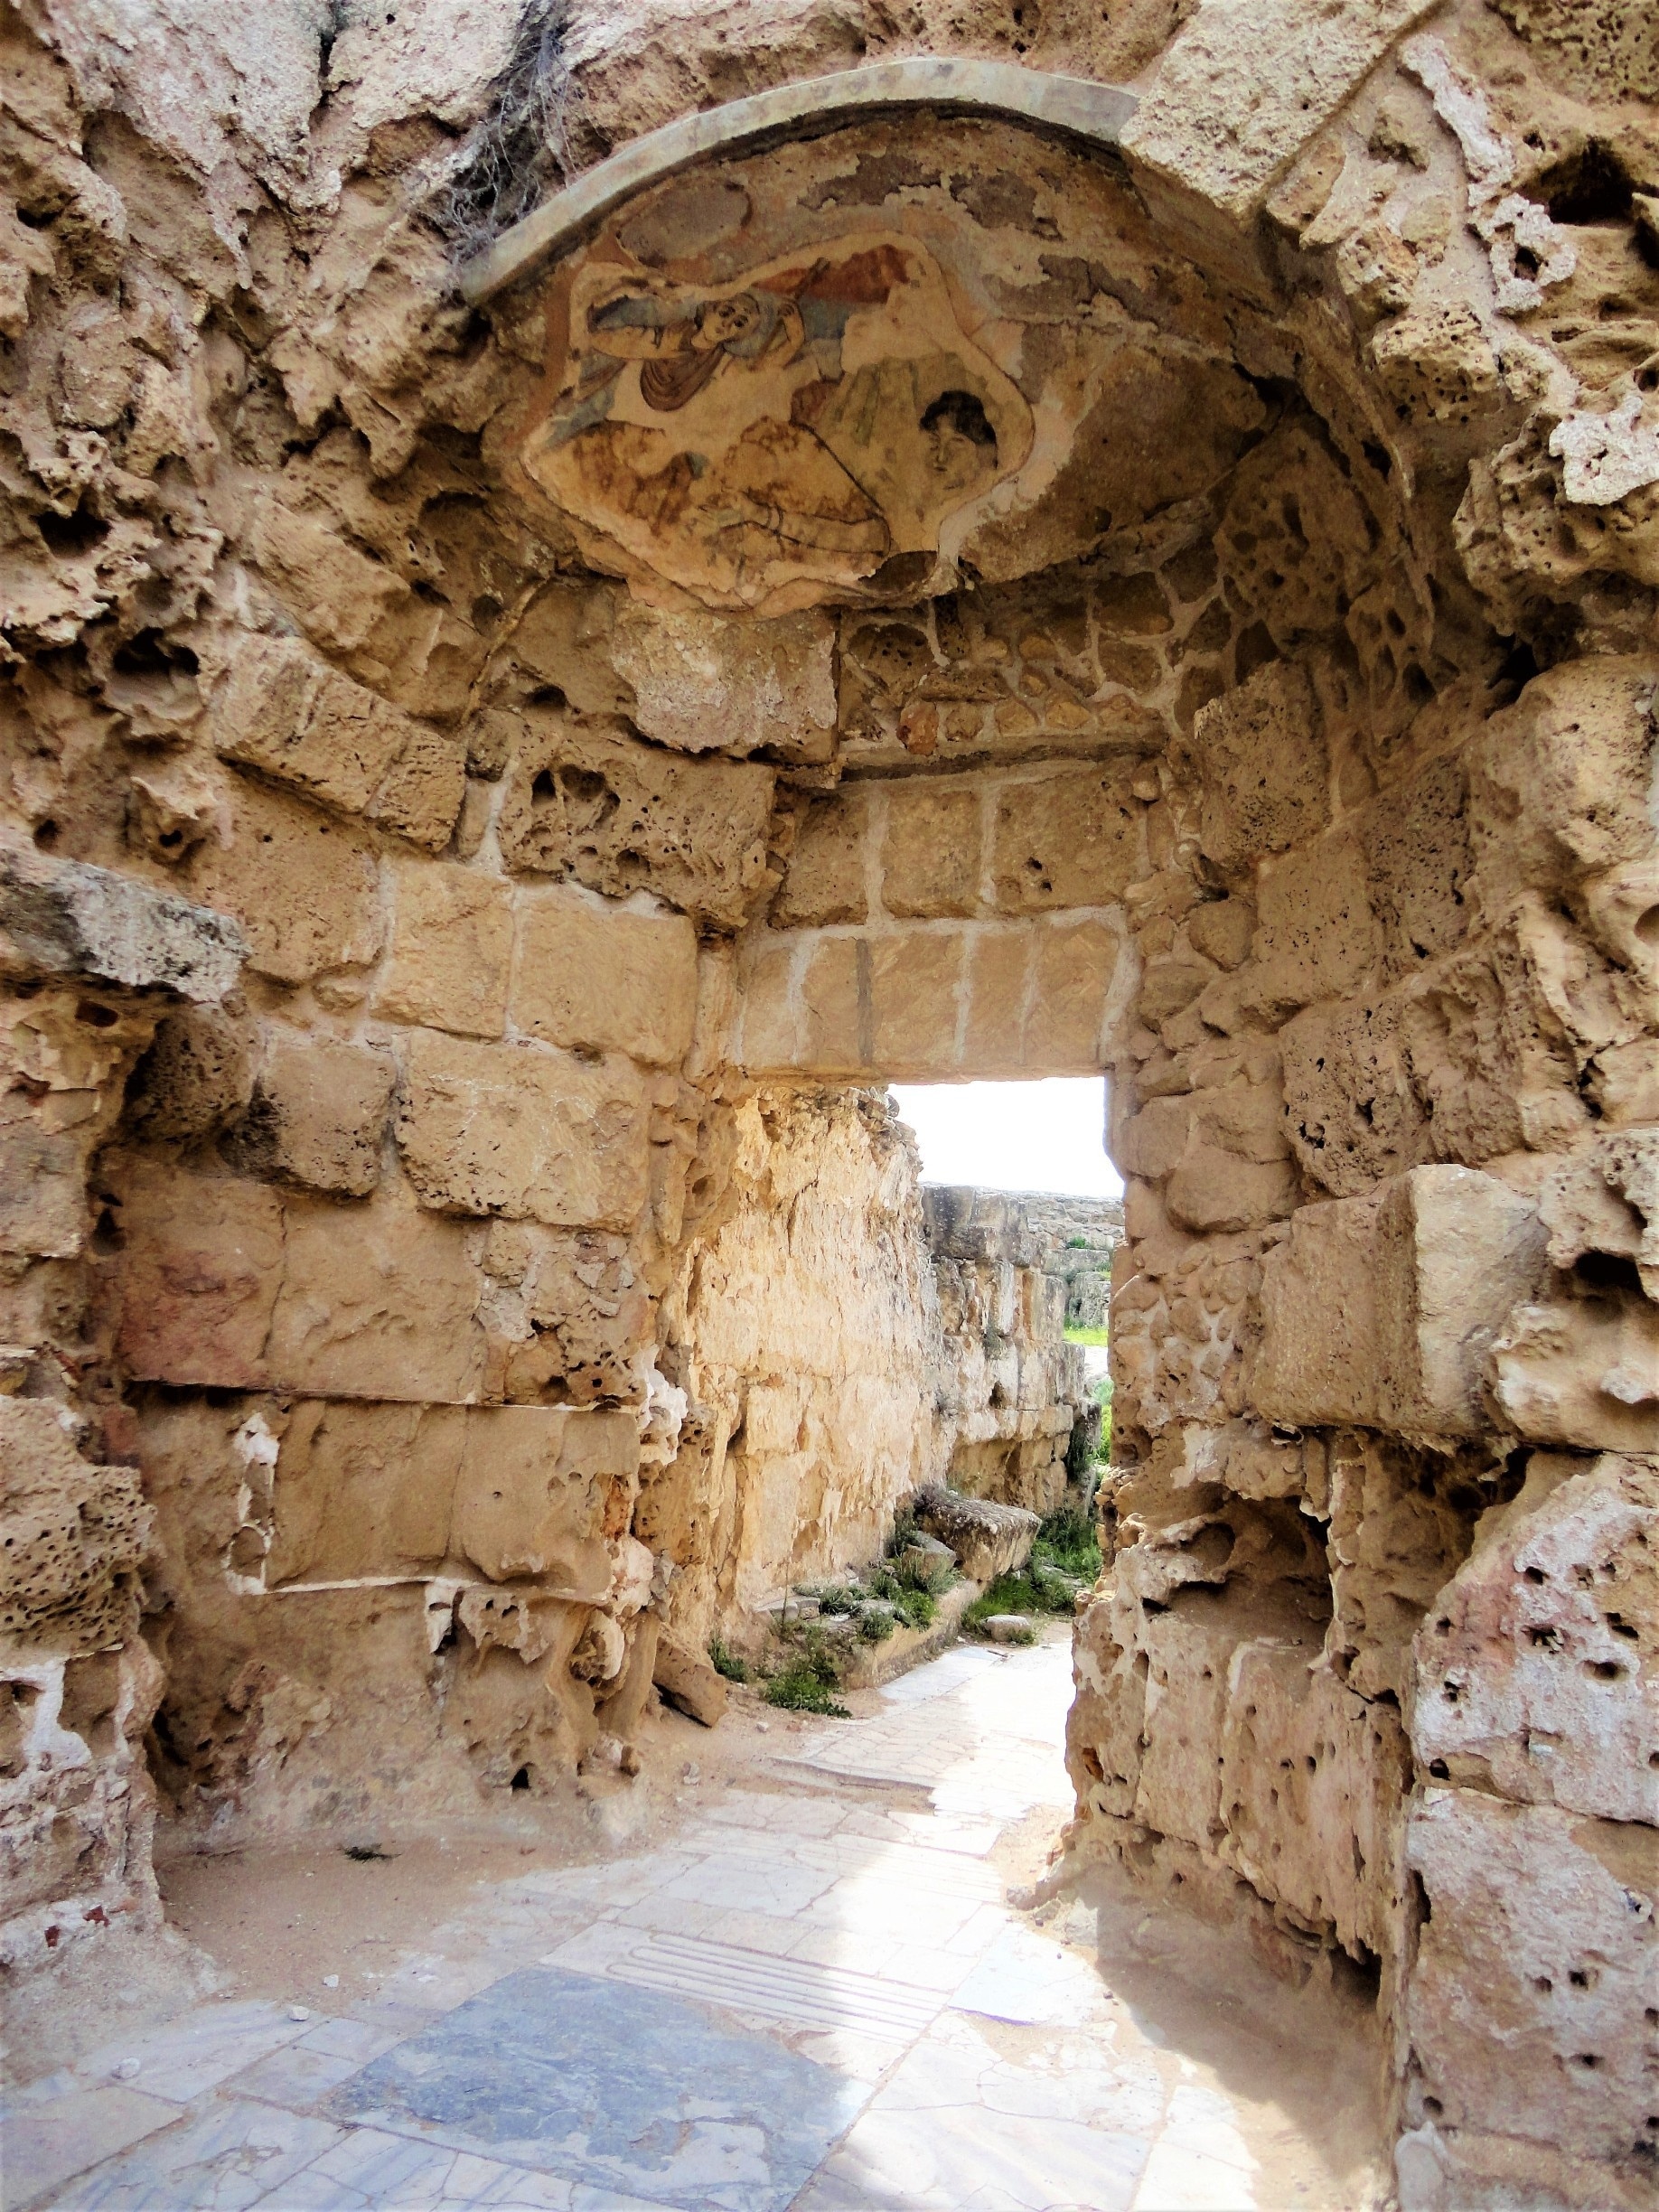 #Mosaic #artwork at the #Roman #ruins of #Salamis, #Cyprus #Mediterranean
#lifeatexpedia #StunningStructure  #Details